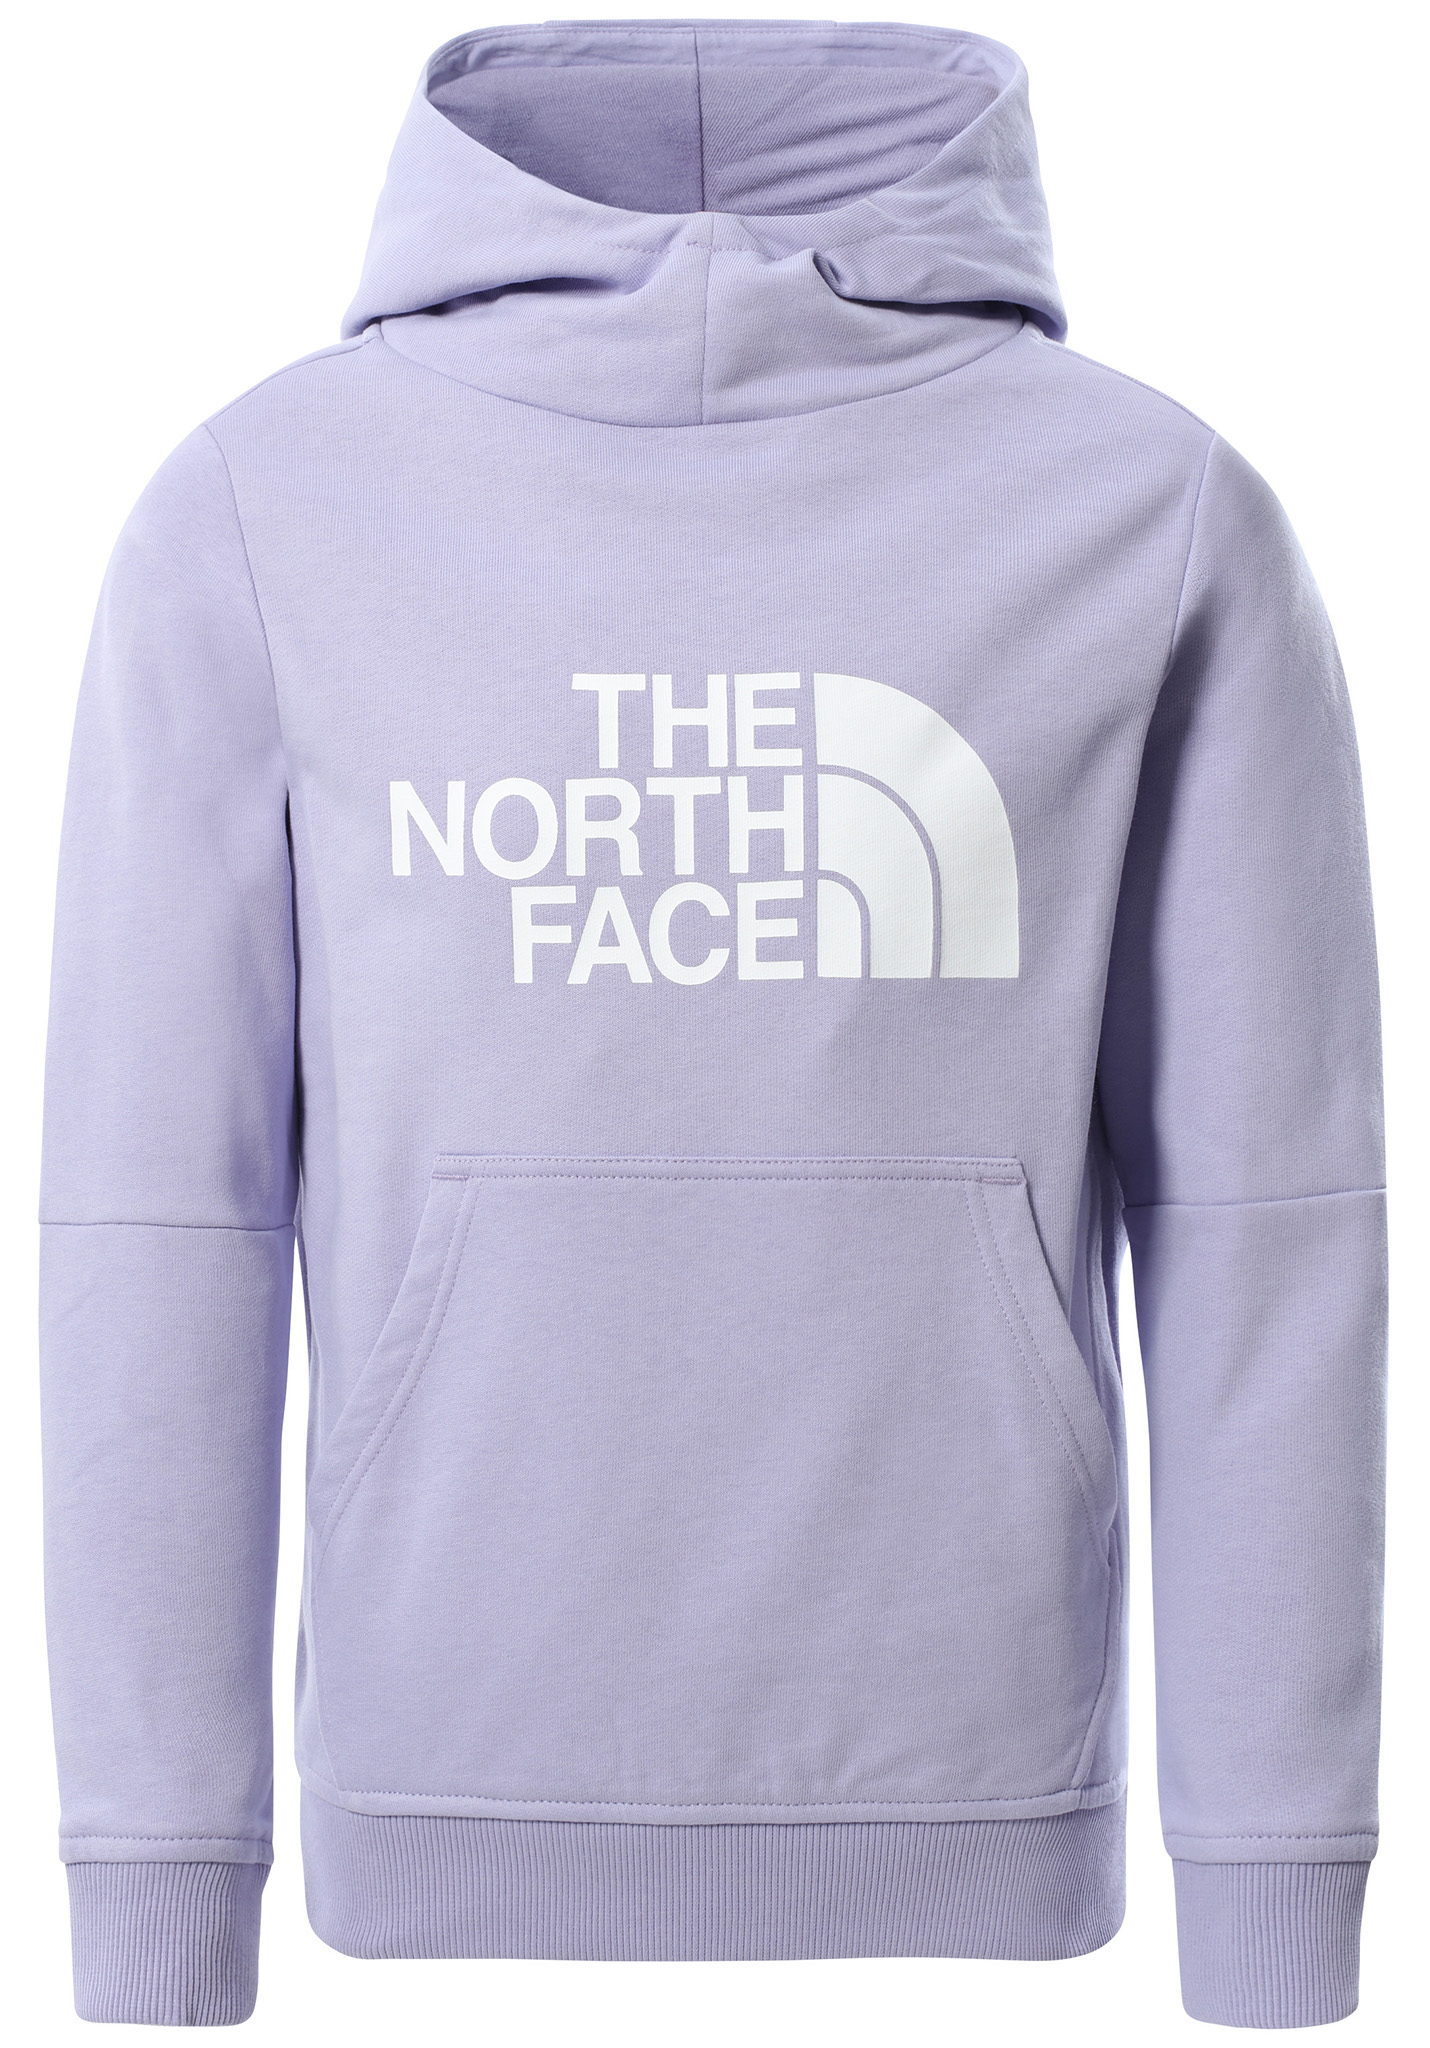 The North Face Drew Peak Hoodies süßer lavendel XS